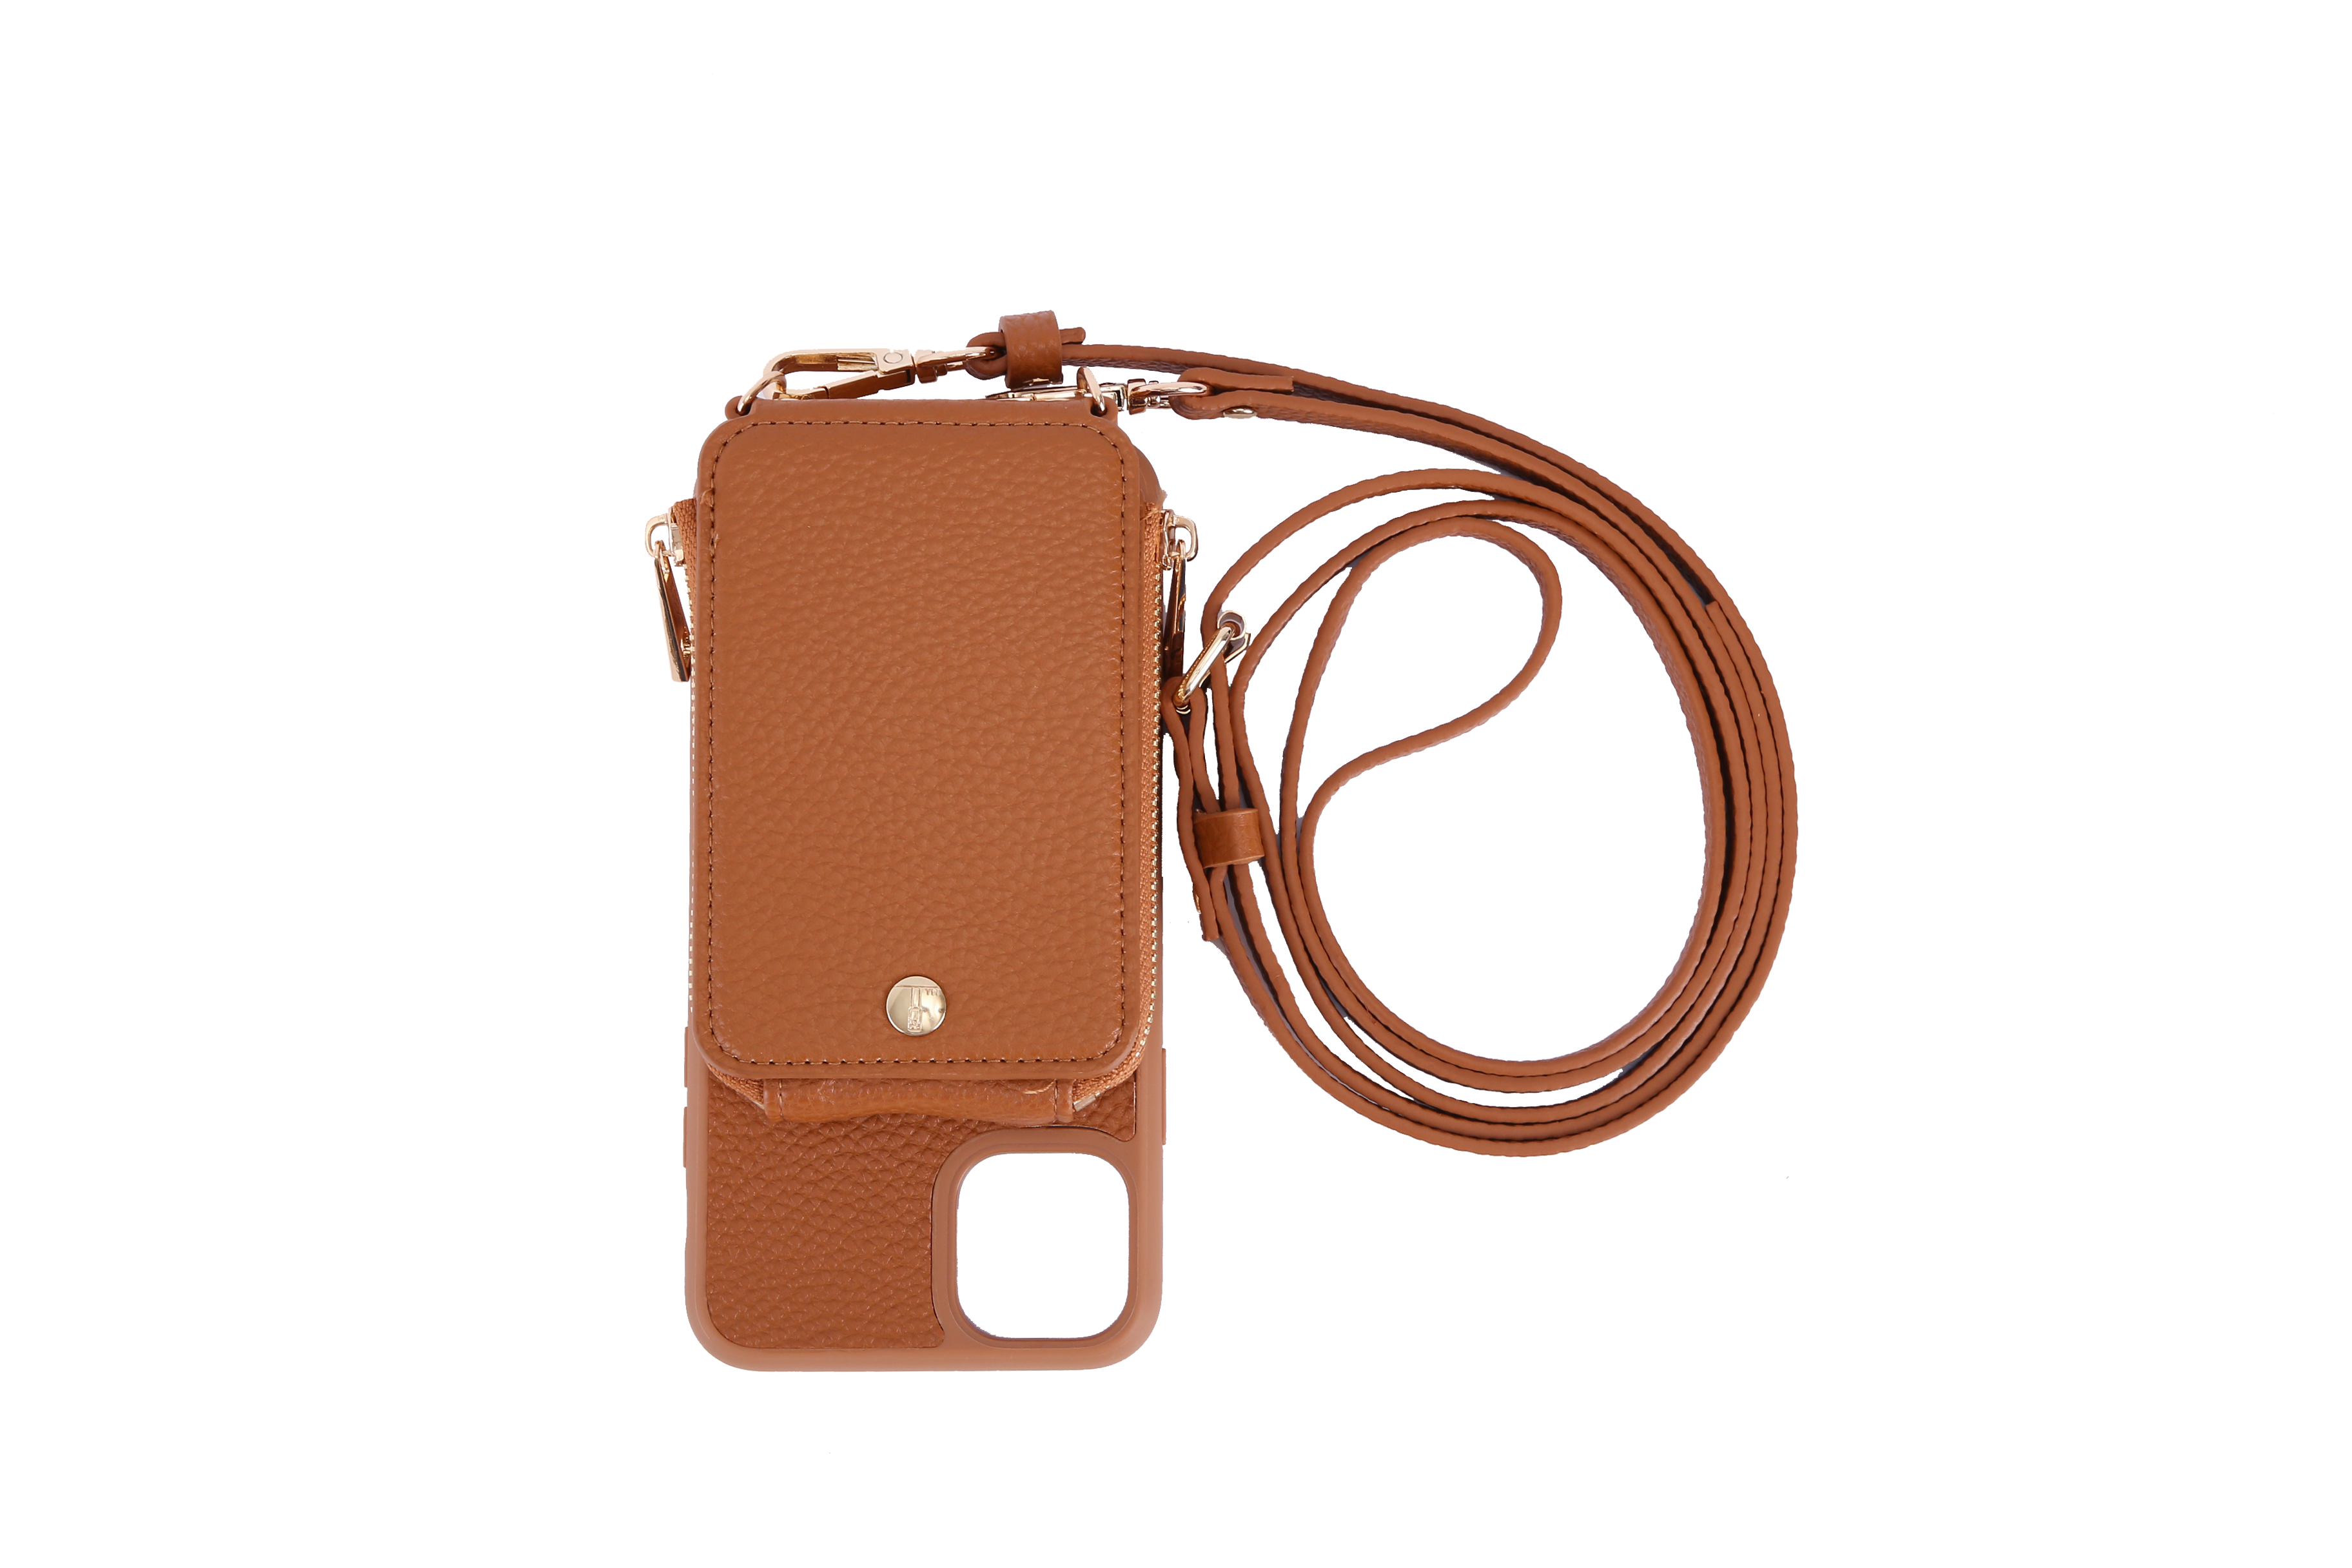 iPhone 12 Mini Crossbody Wallet Case for Women Girl Lanyard Card Holder  Zipper Phone Pouch Purse